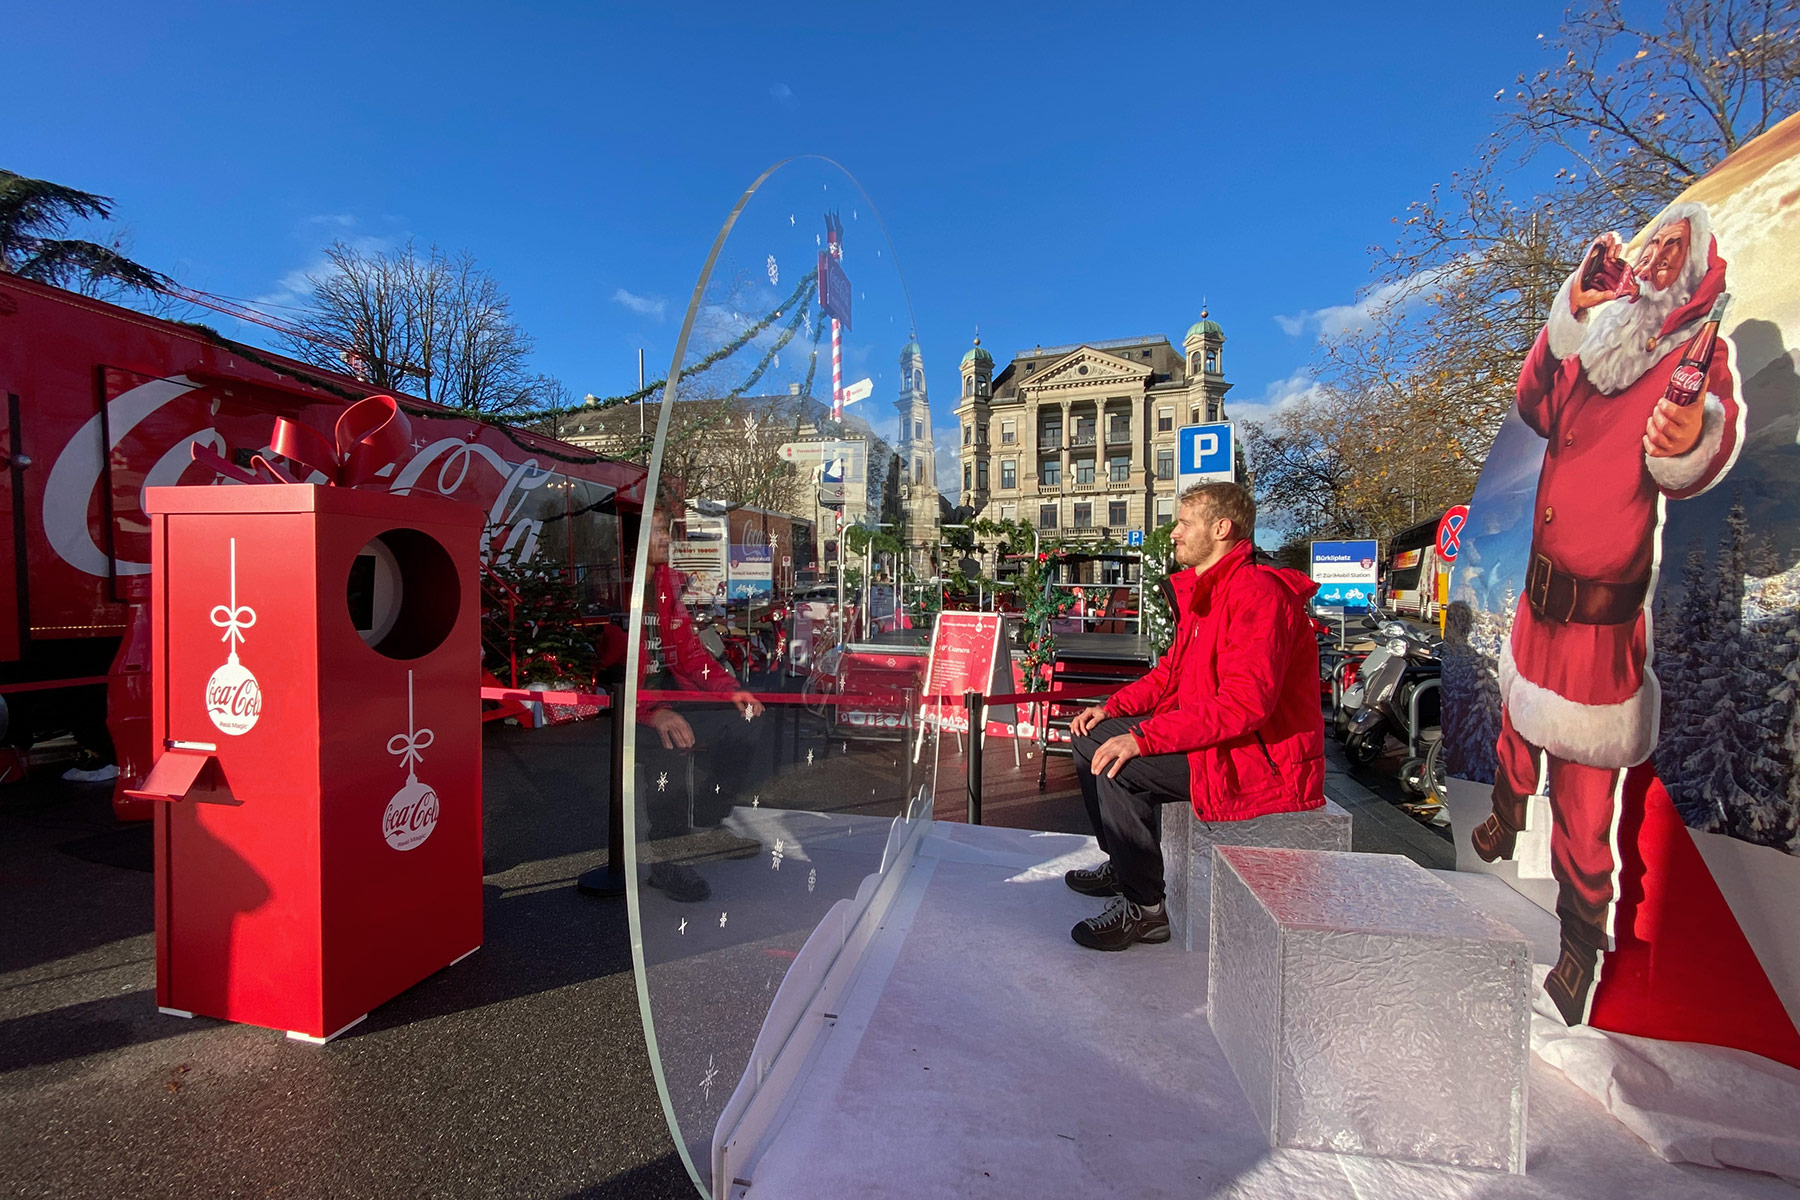 Coca-Cola Truck: Fotobox mit Bedienung per Smartphone